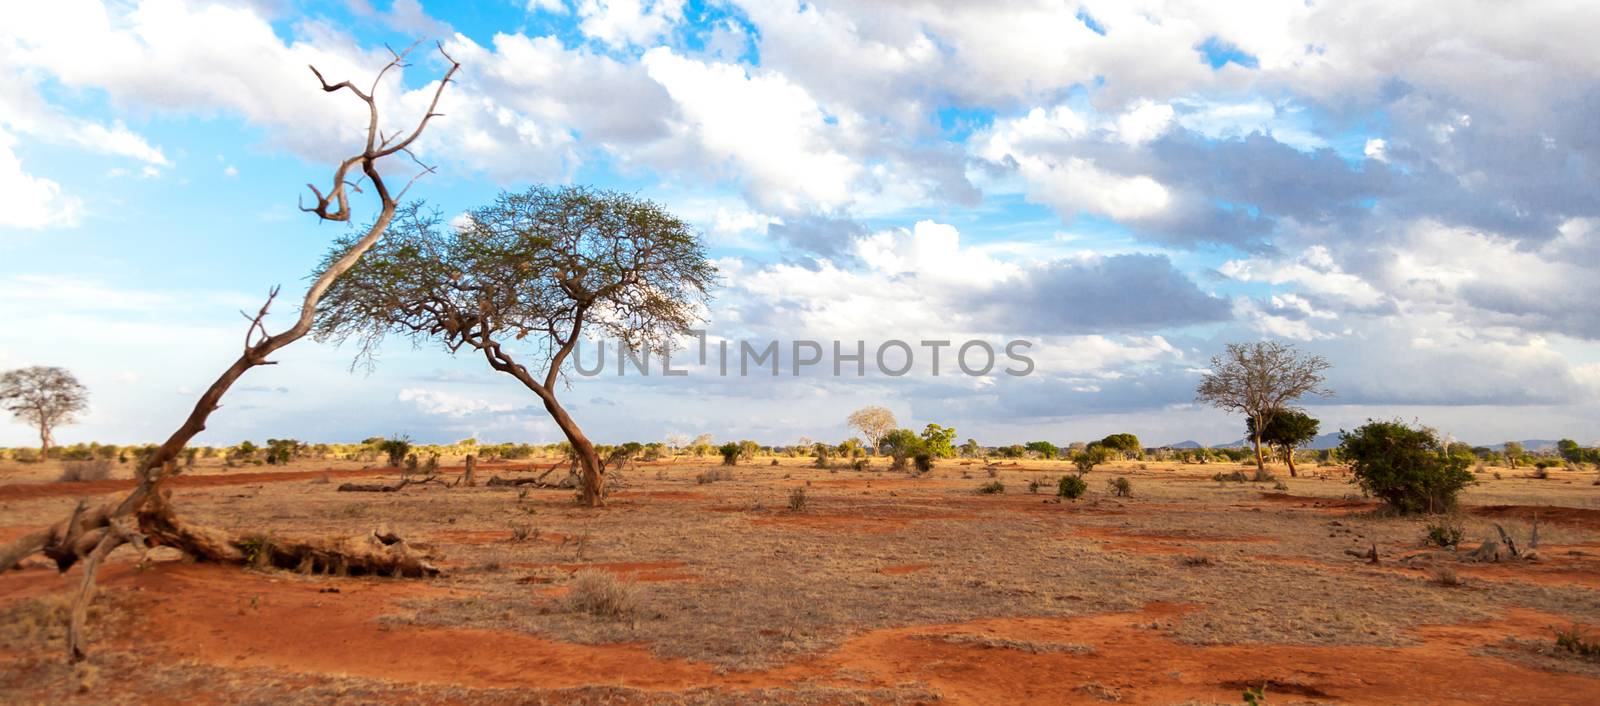 Scenery of the savannah of Kenya, on safari by 25ehaag6